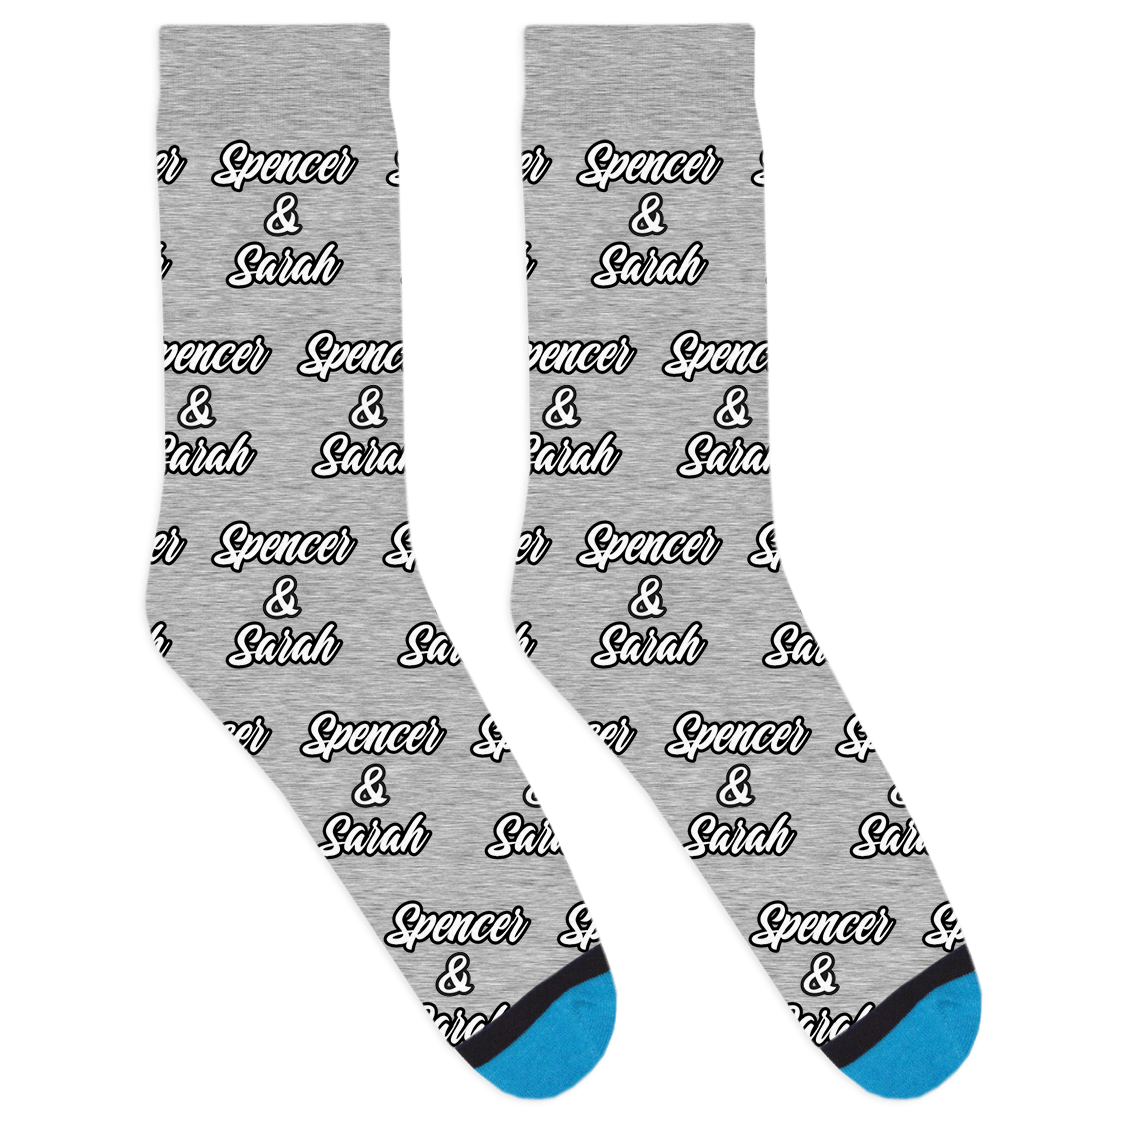 divvy socks